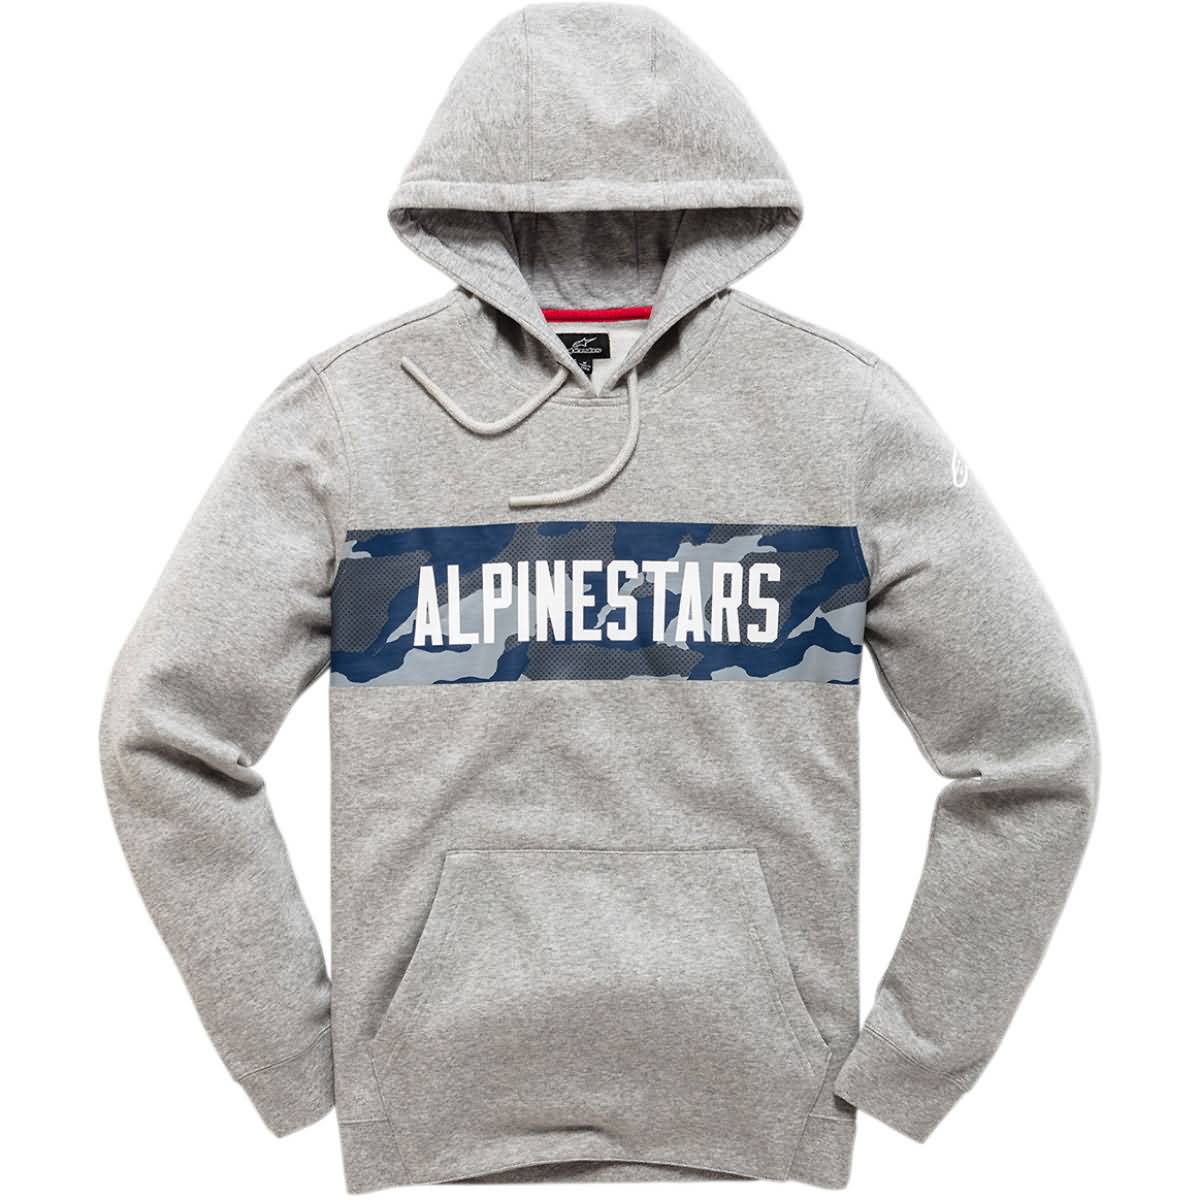 Alpinestars Blast Men's Hoody Pullover Sweatshirts-3050